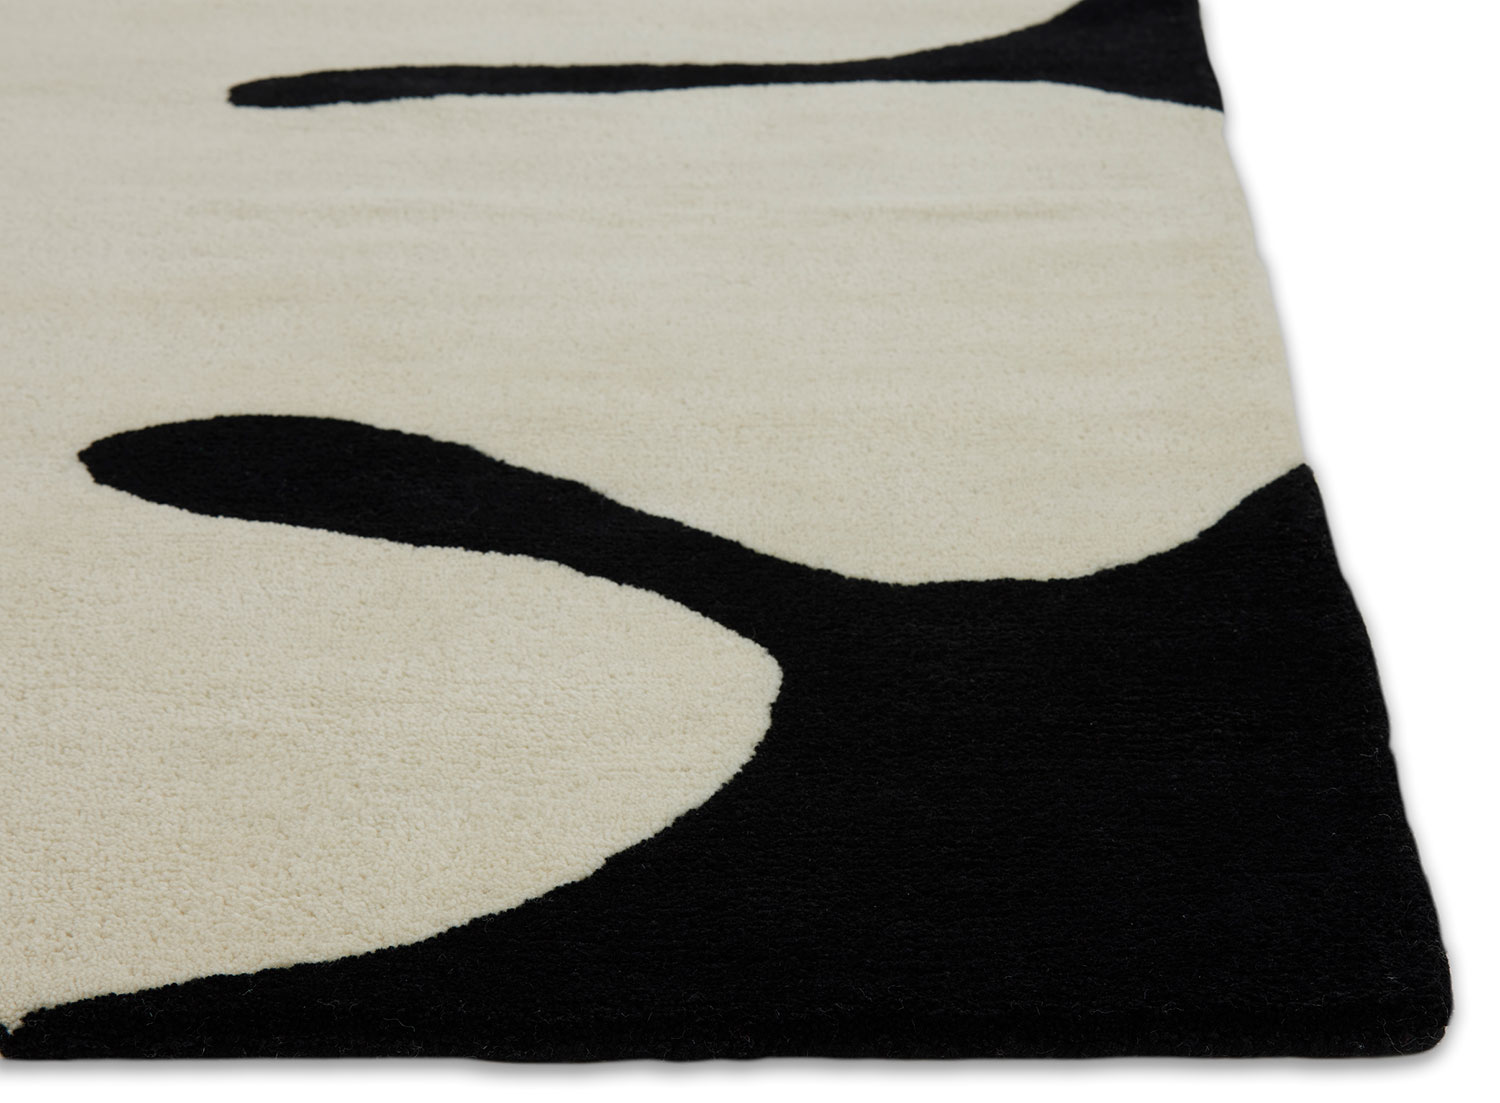 A detail of Astrud Coconut area rug by Angela Adams